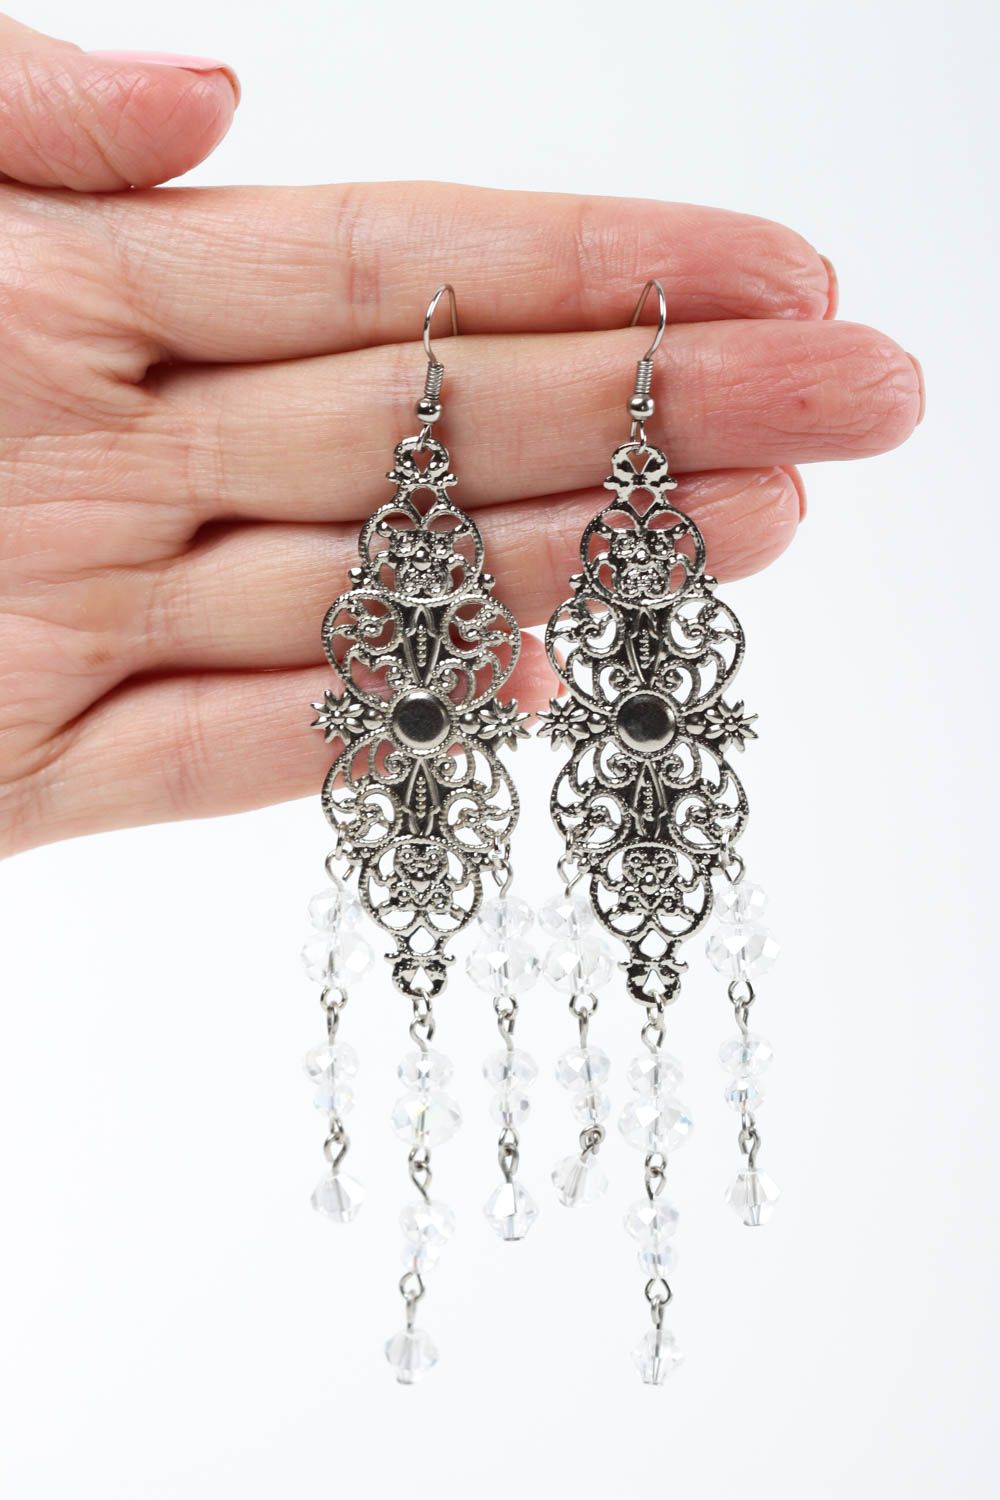 Handmade earrings designer earrings unusual gift crystal accessory gift for her photo 5